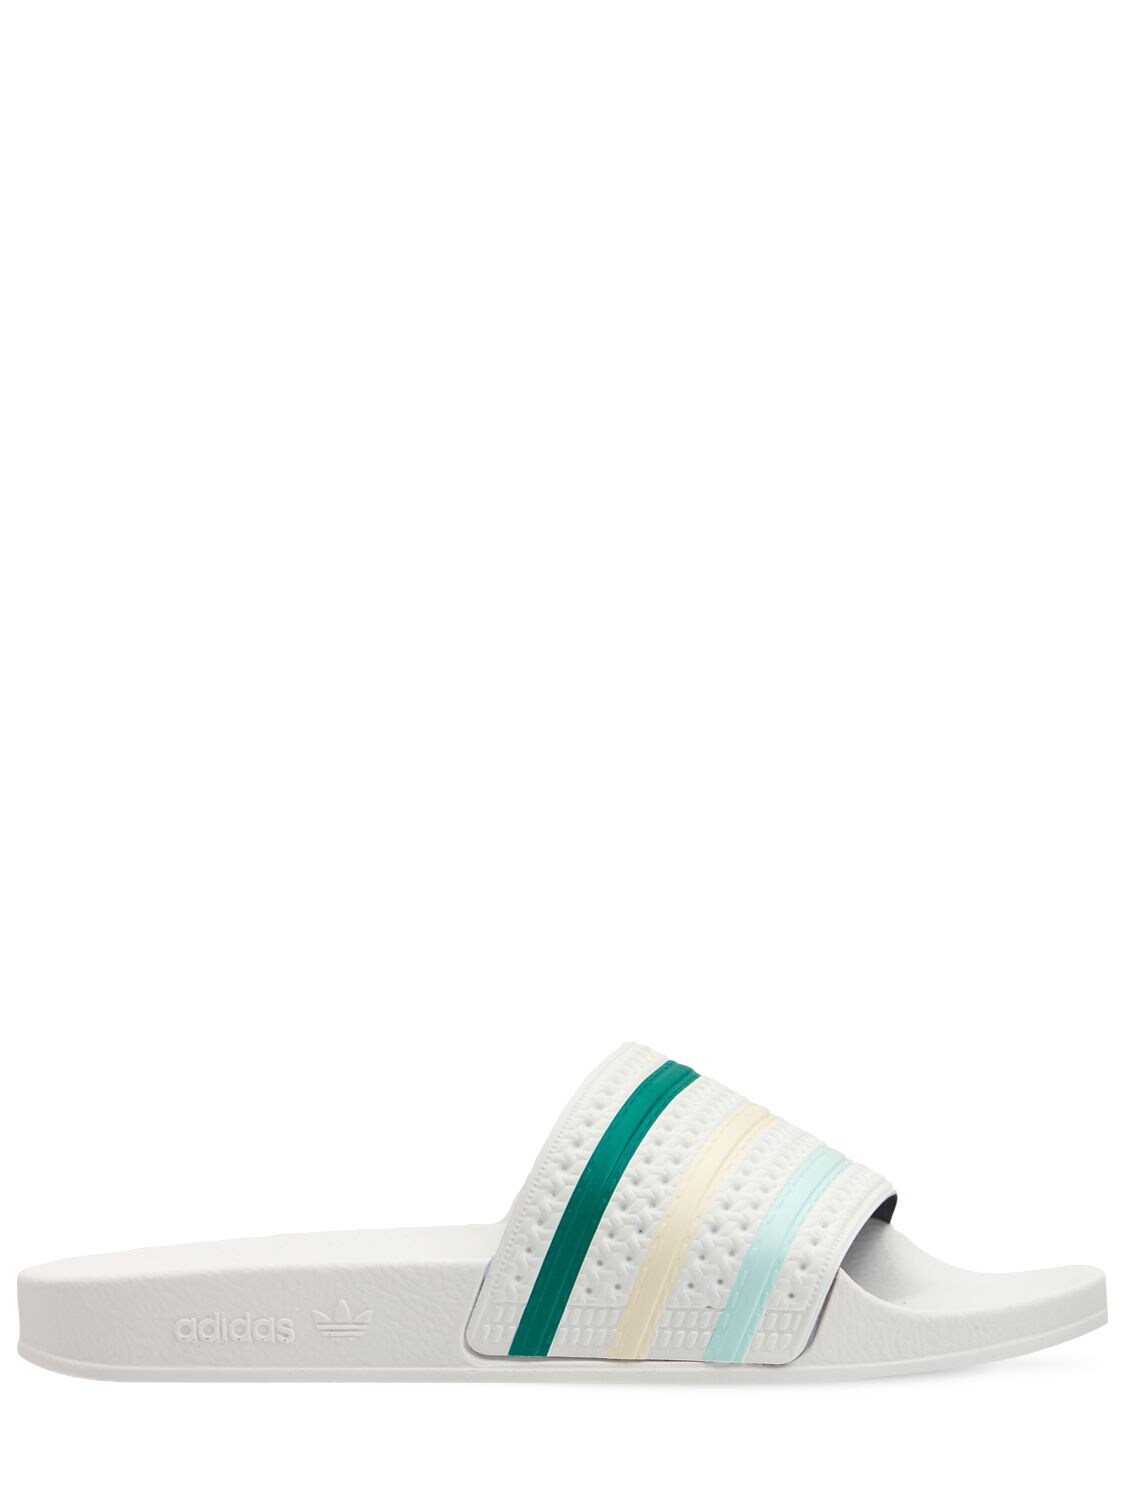 Adidas Originals Adilette Striped Slide Sandals In White